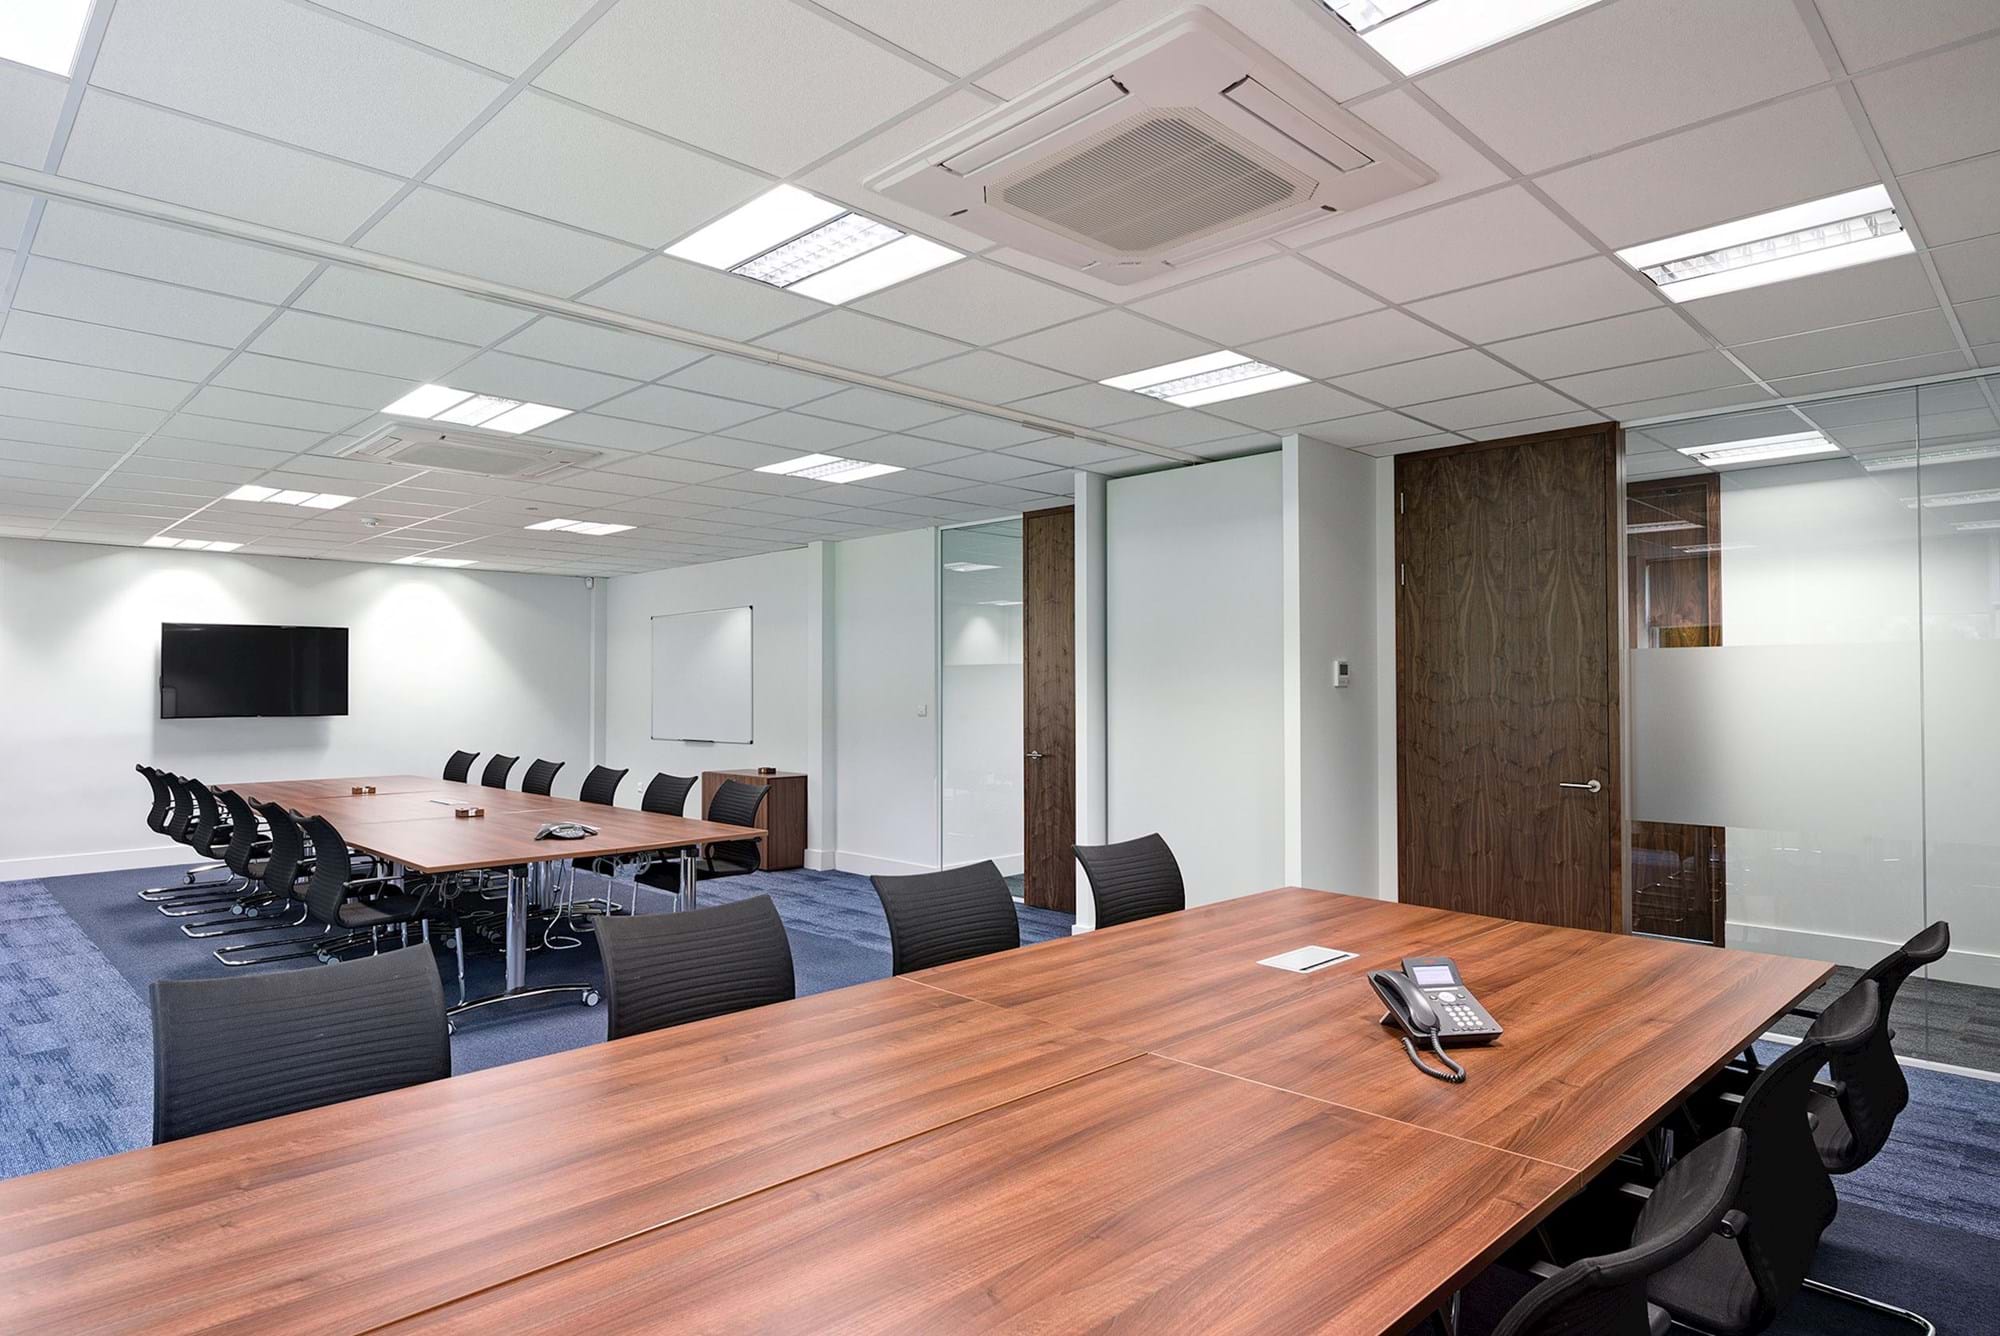 Modus Workspace office design, fit out and refurbishment - Valspar - Meeting Room - Valspar 08 highres sRGB.jpg